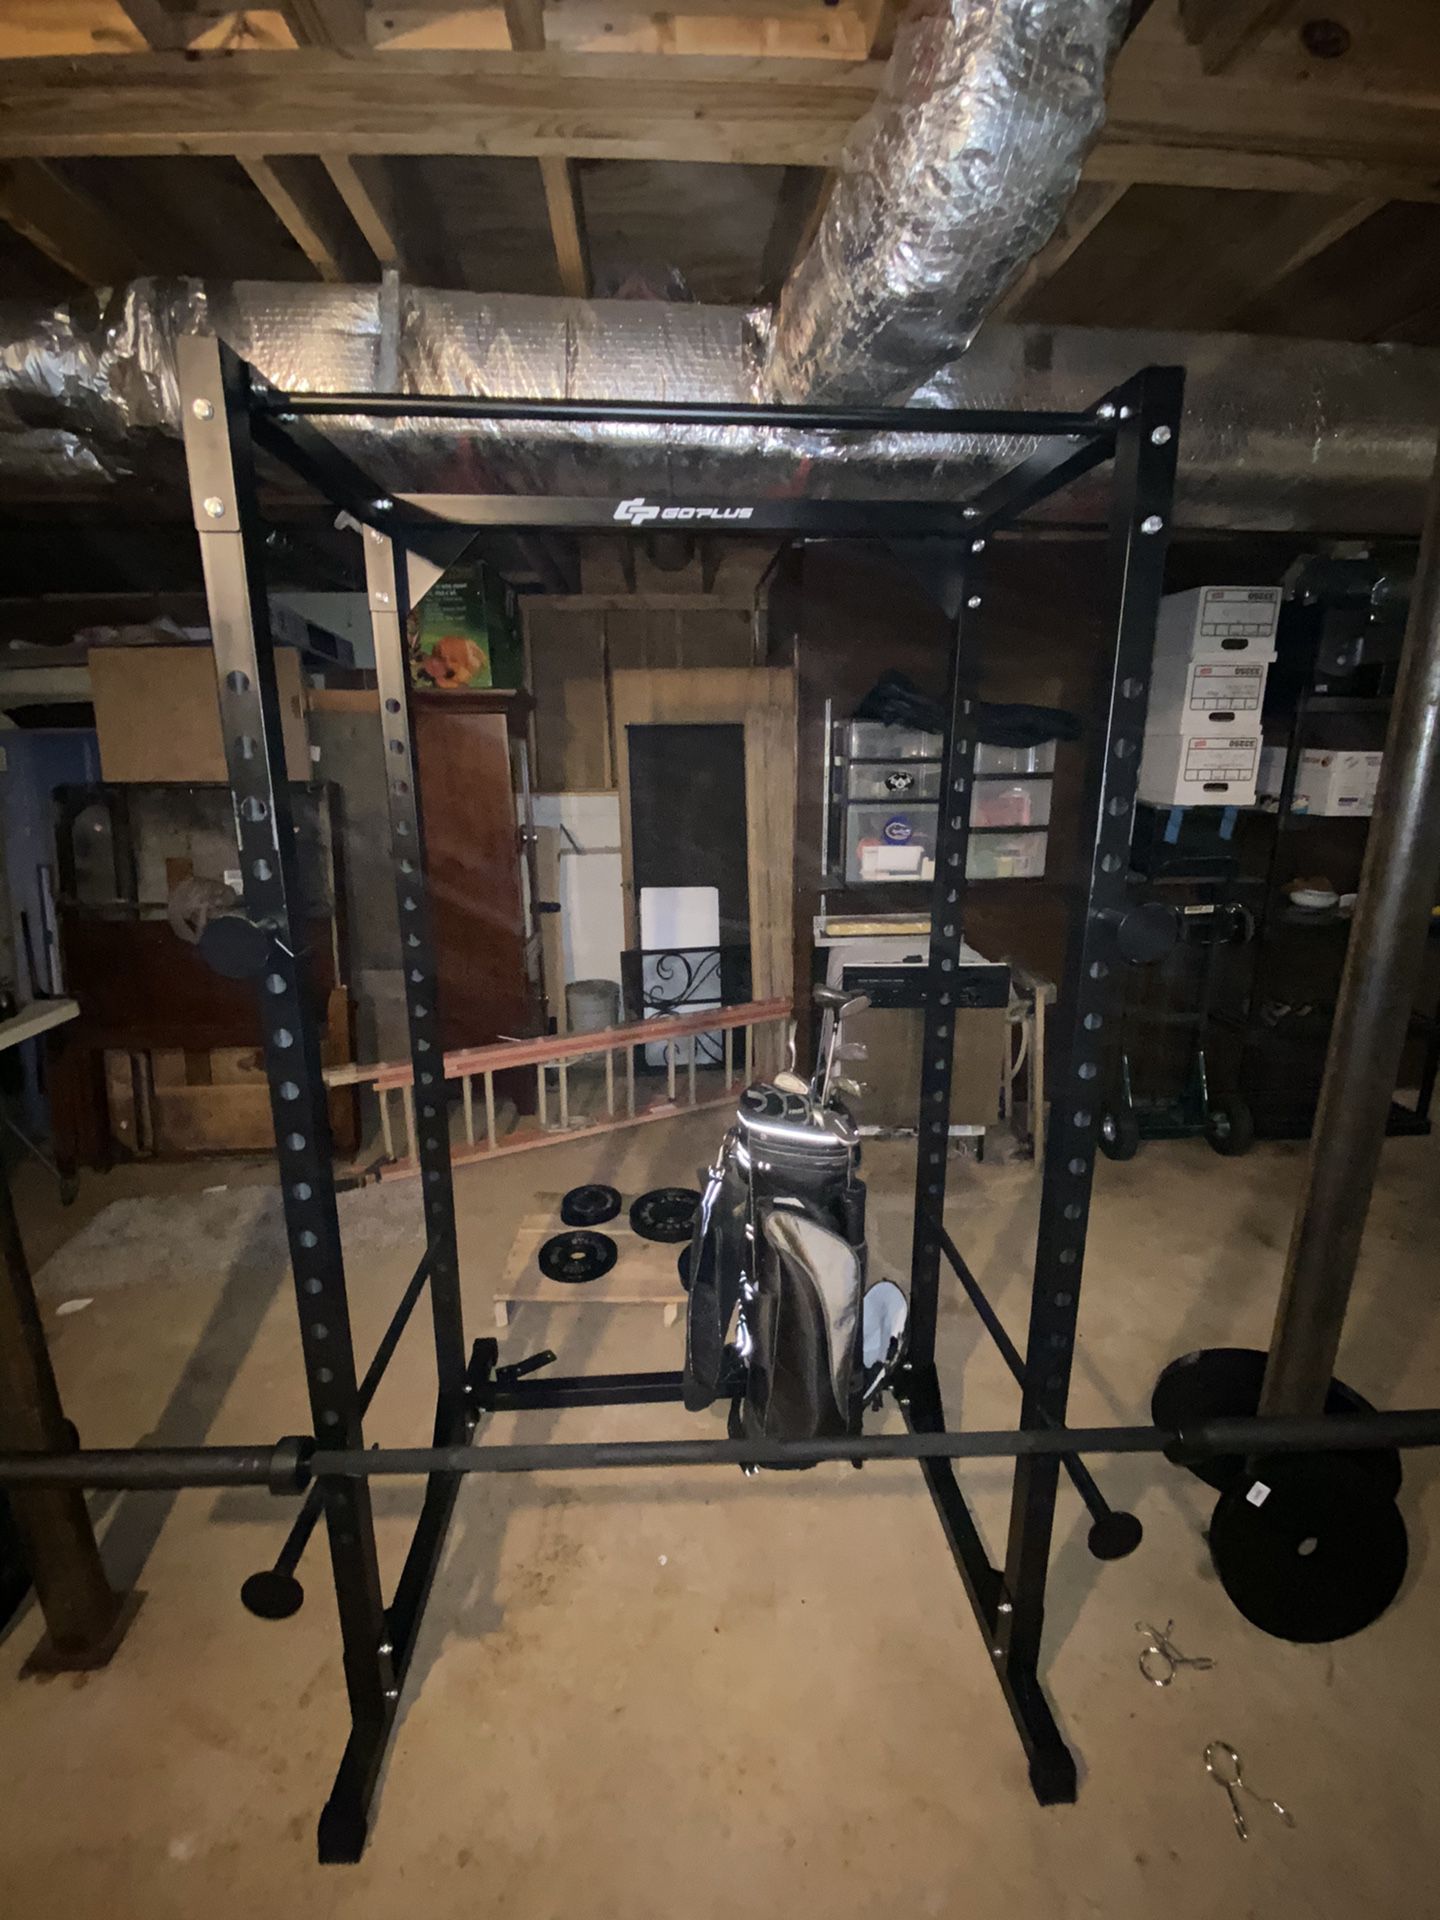 Workout equipment Power Rack weights and Bar